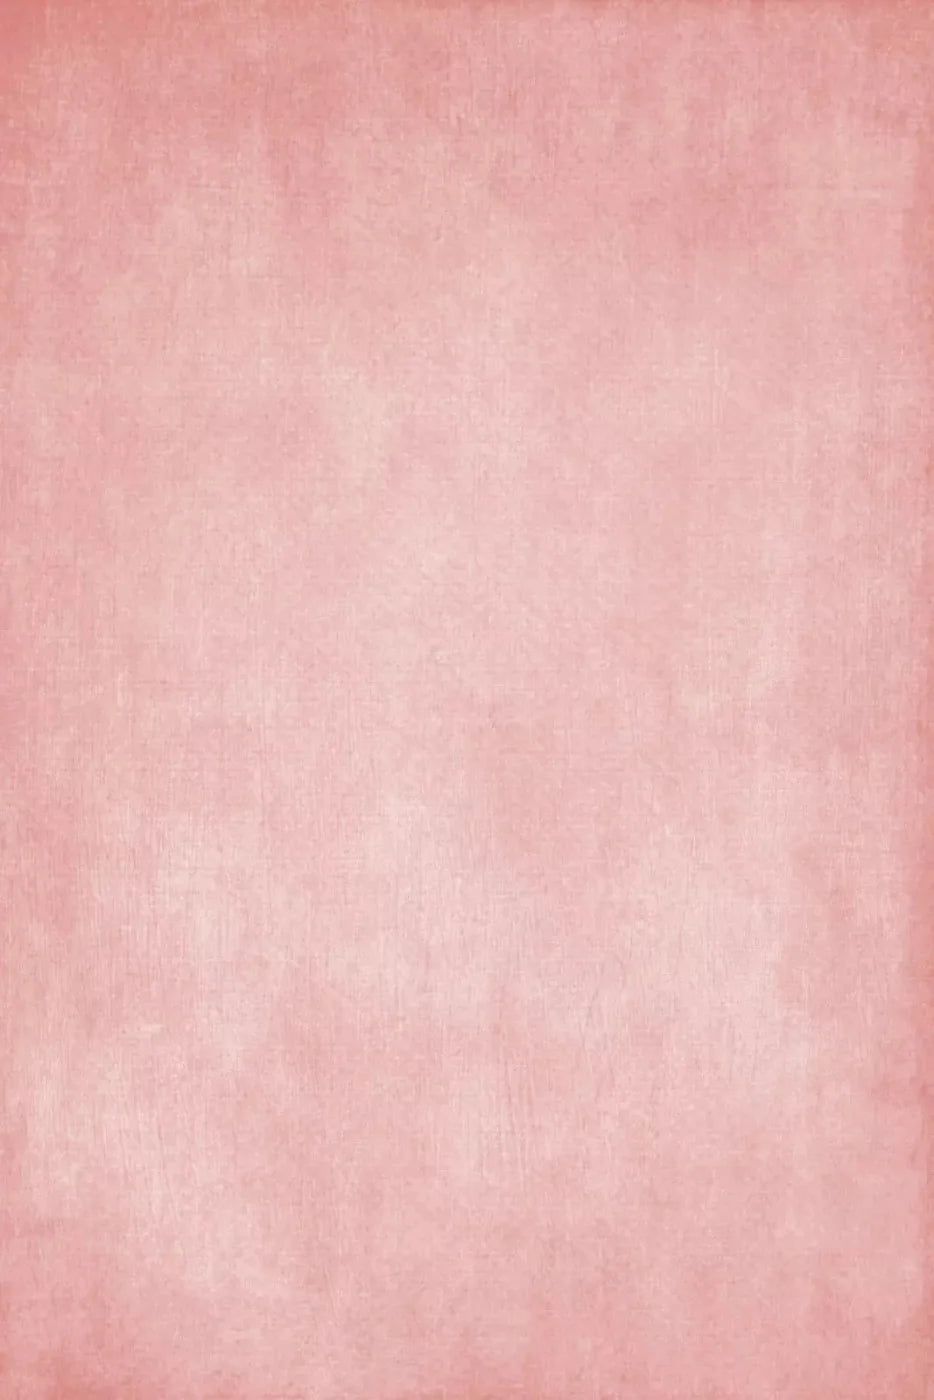 Daydream Pink 4X5 Rubbermat Floor ( 48 X 60 Inch ) Backdrop